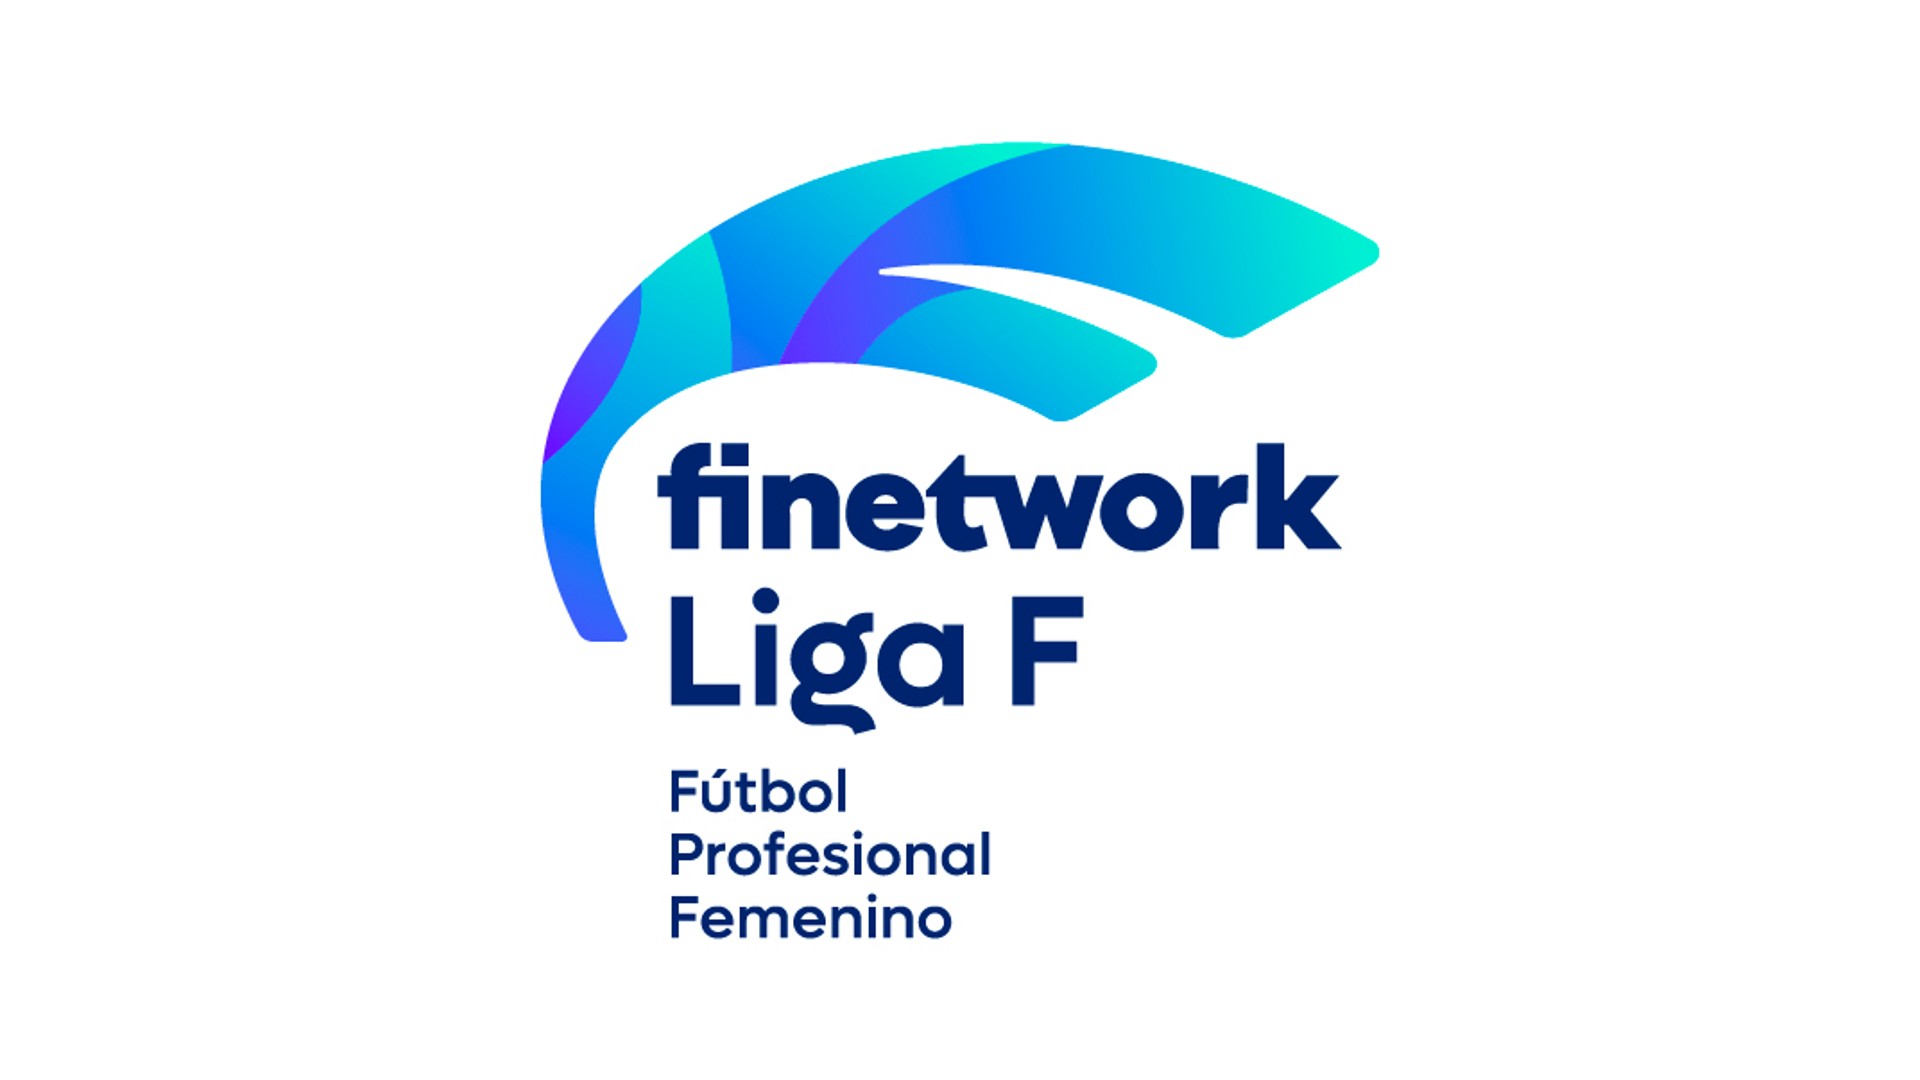 Finetwork Liga F Logo